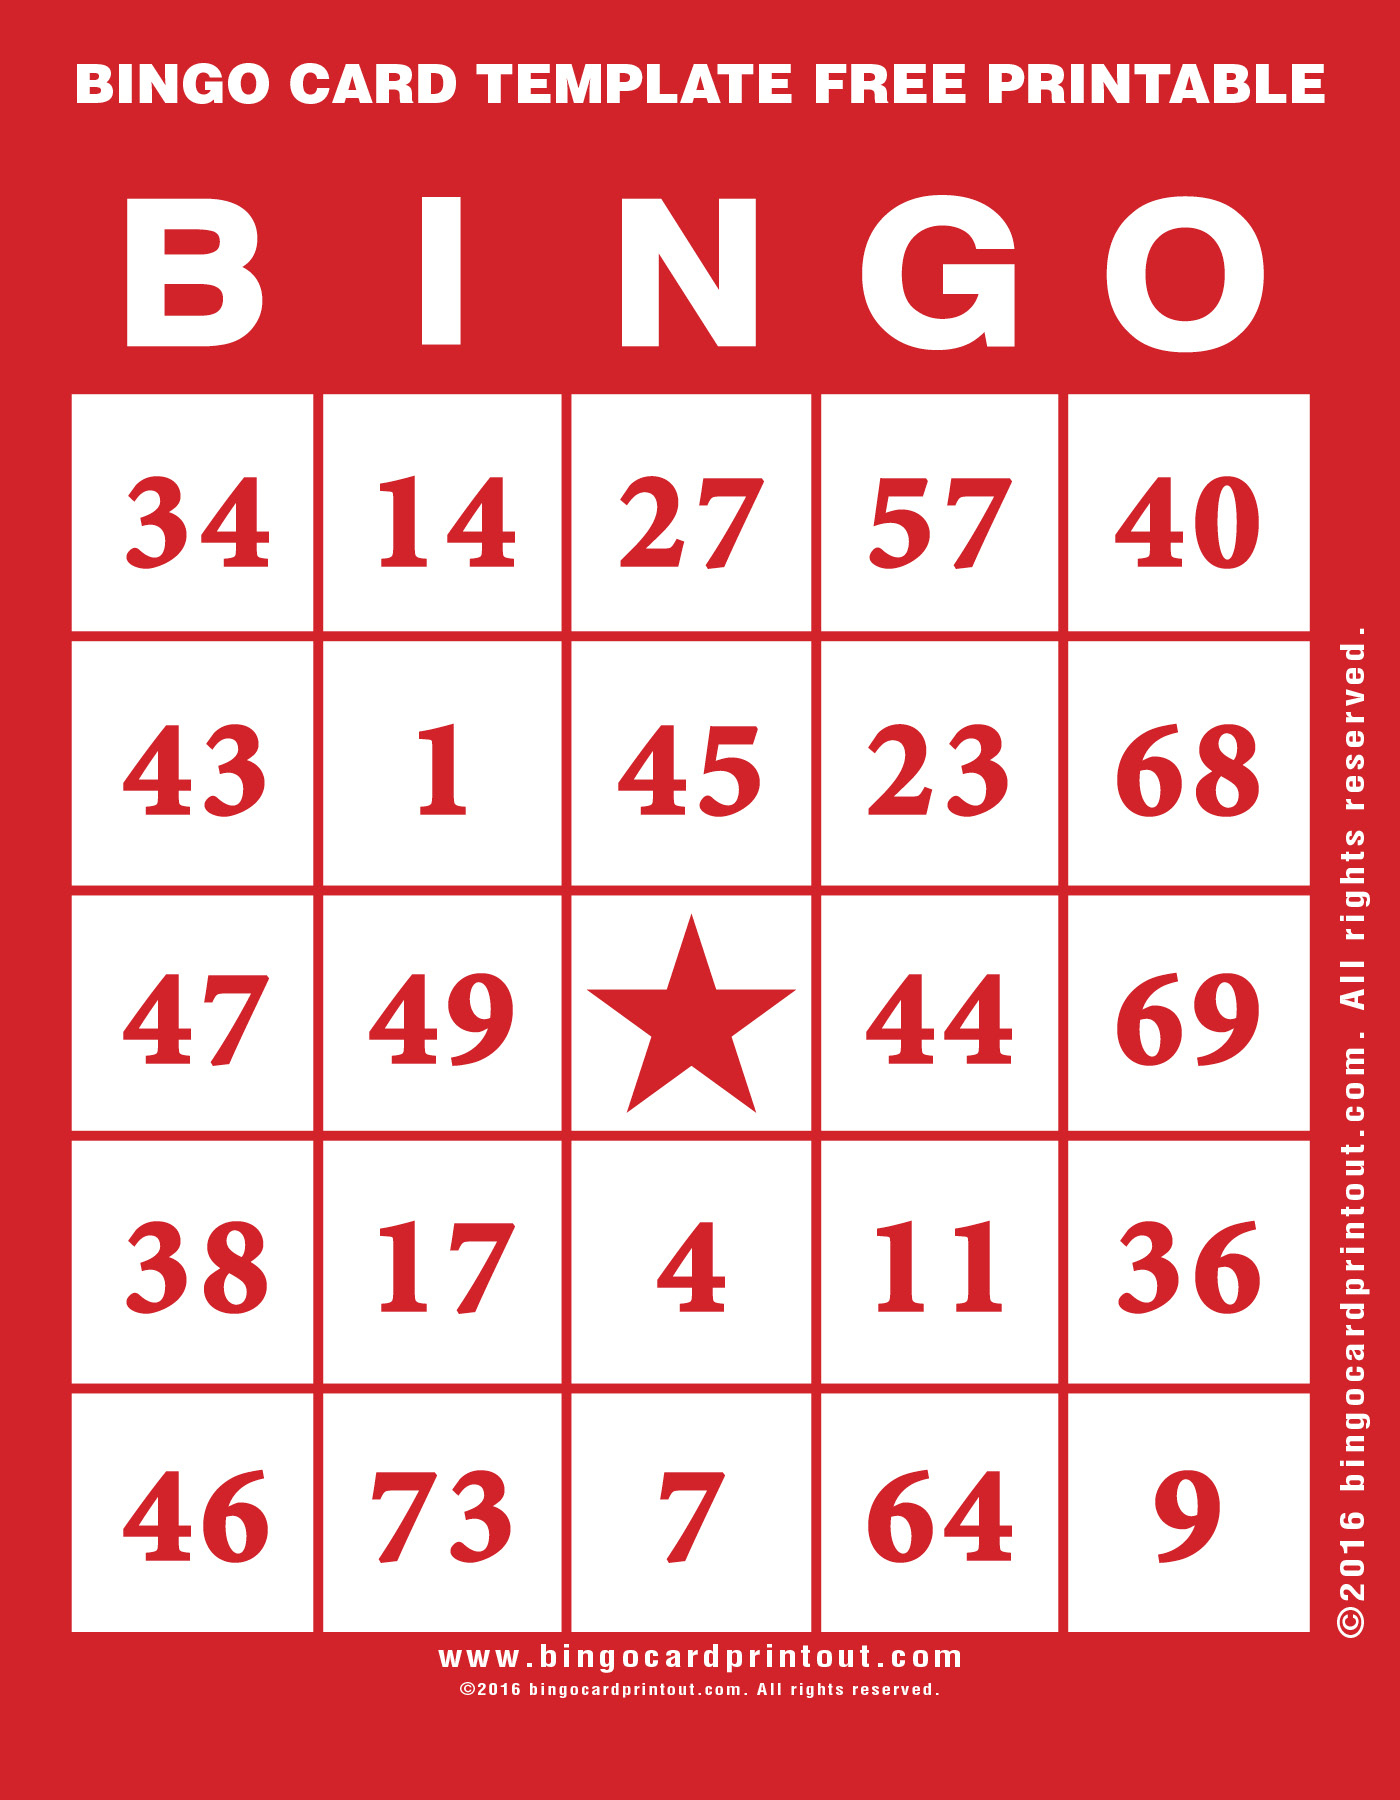 Bingo Card Template Free Printable - Bingocardprintout